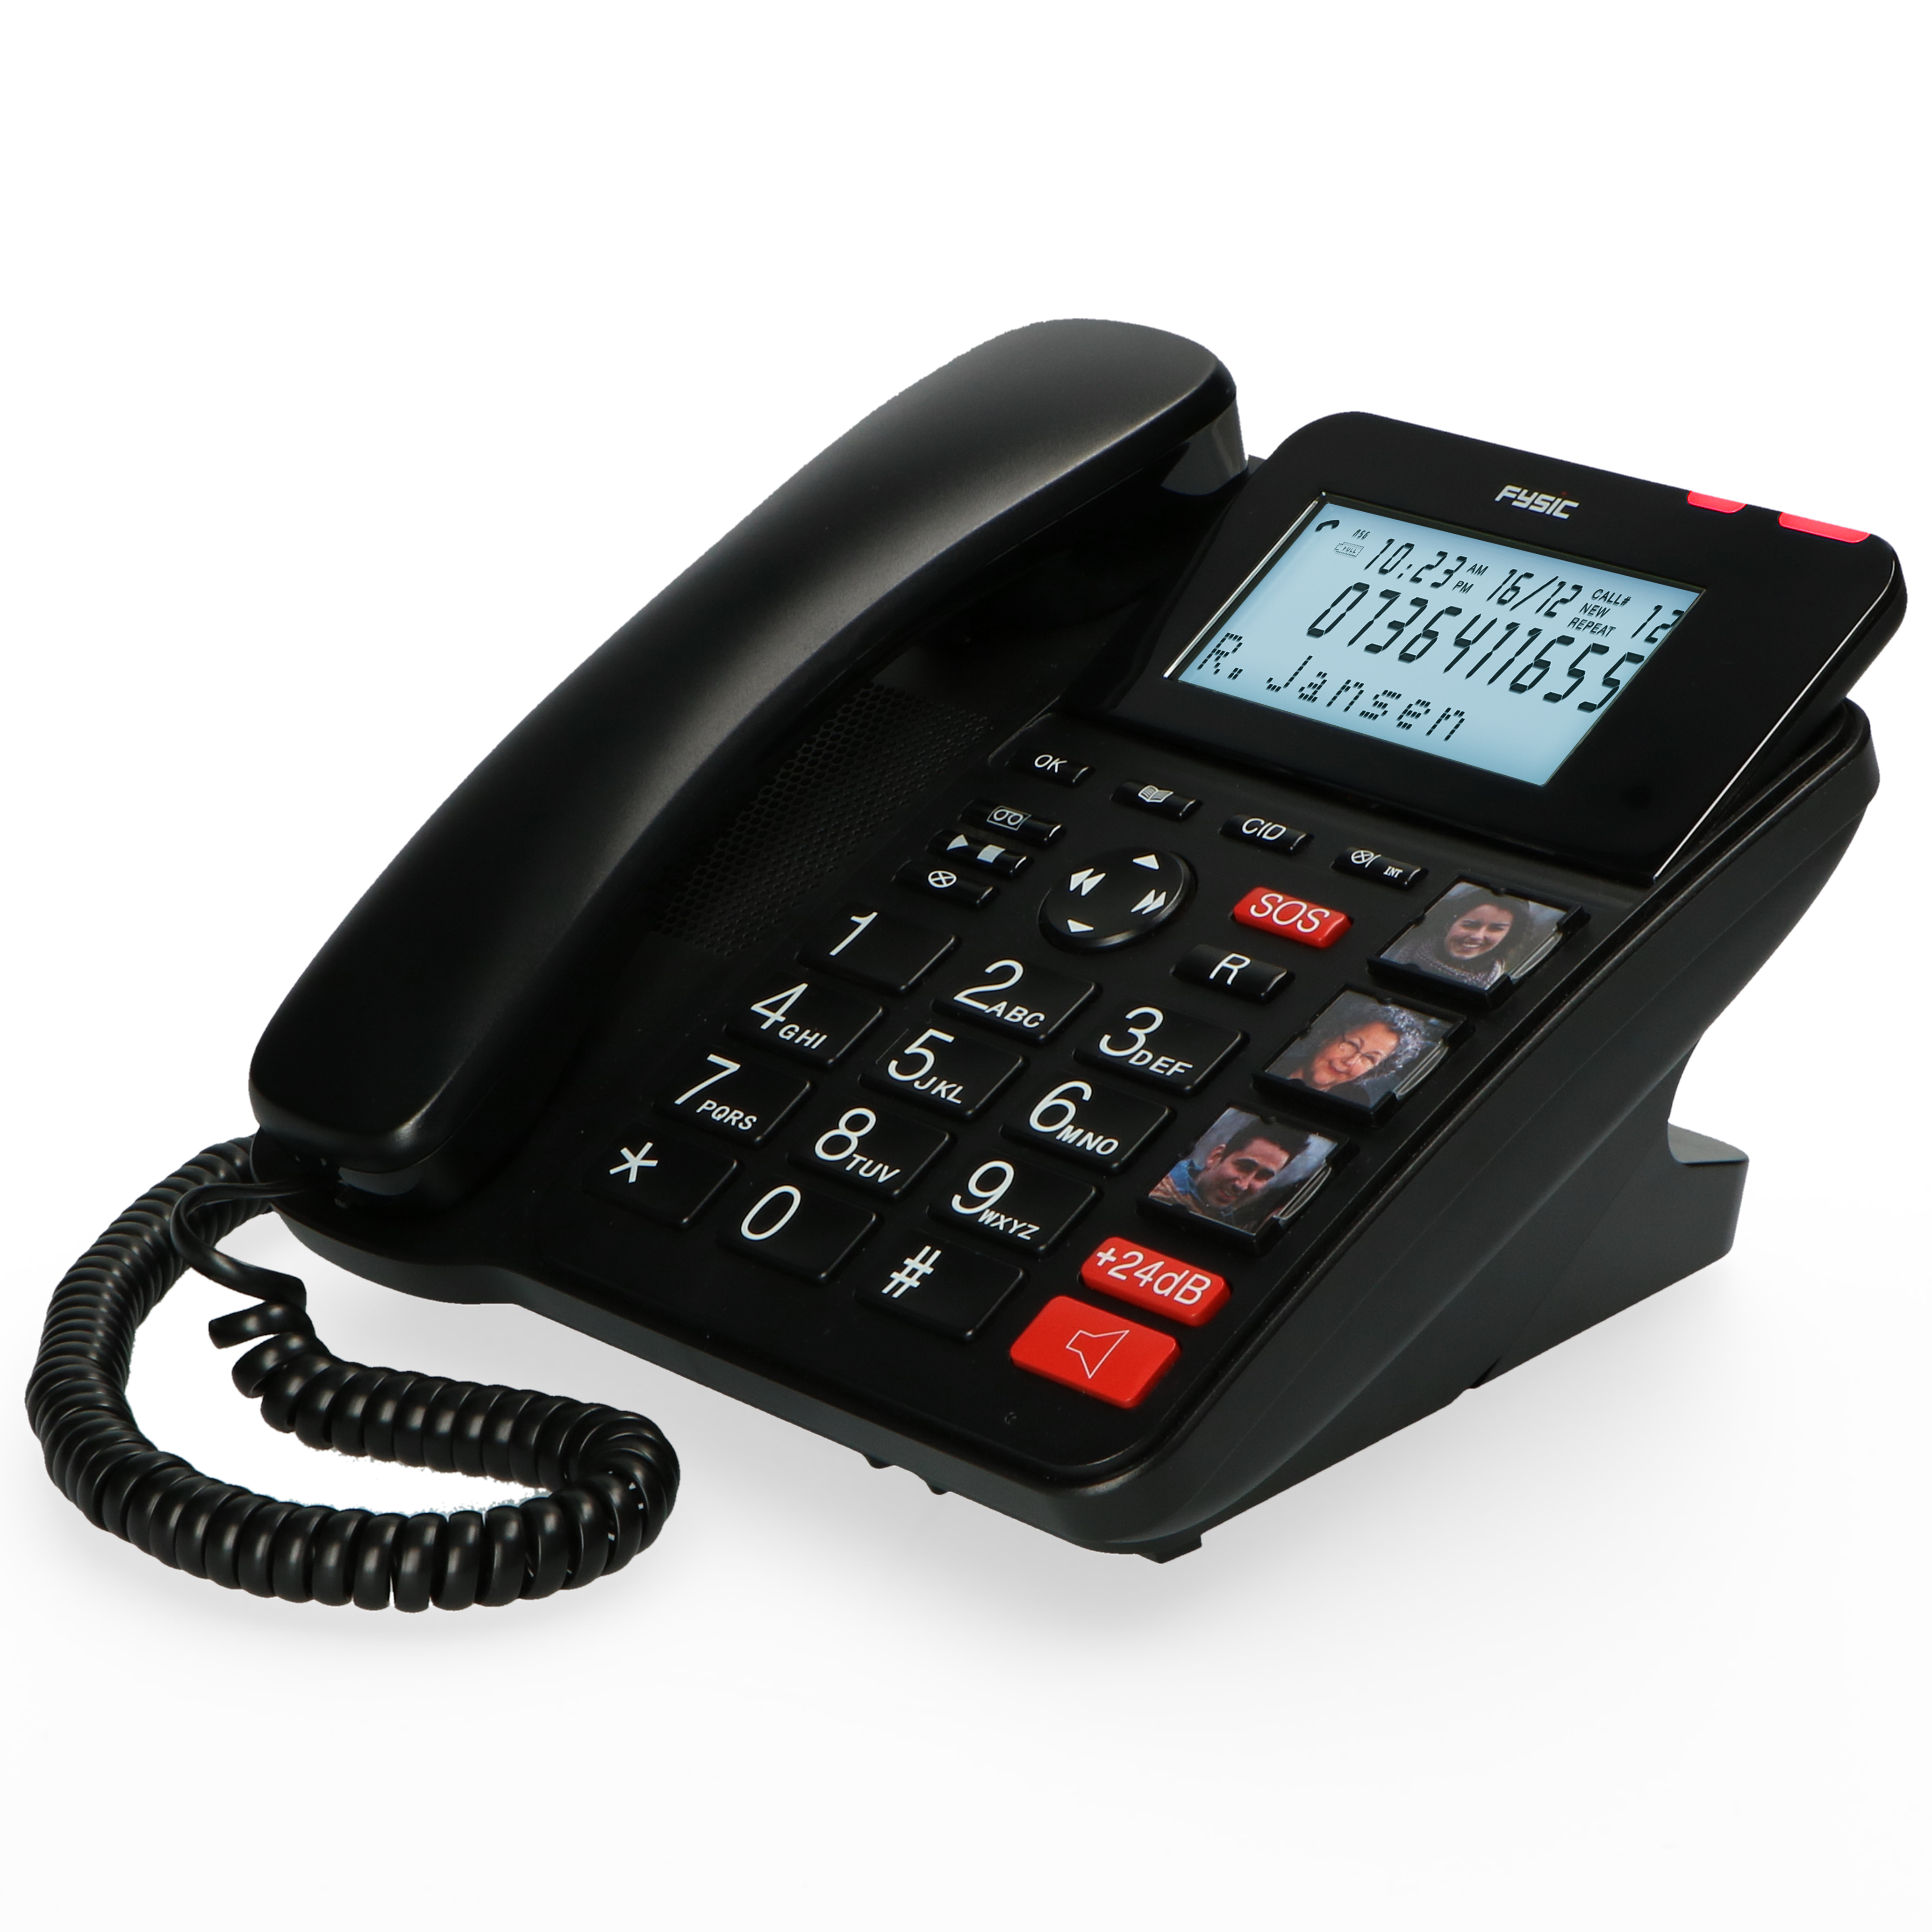 Klingelverstärker,großen Tasten,SOS-Taste FX-8025 - und Handset Seniorentelefon Seniorentelefon FYSIC mit extra Klingelverstärker mit